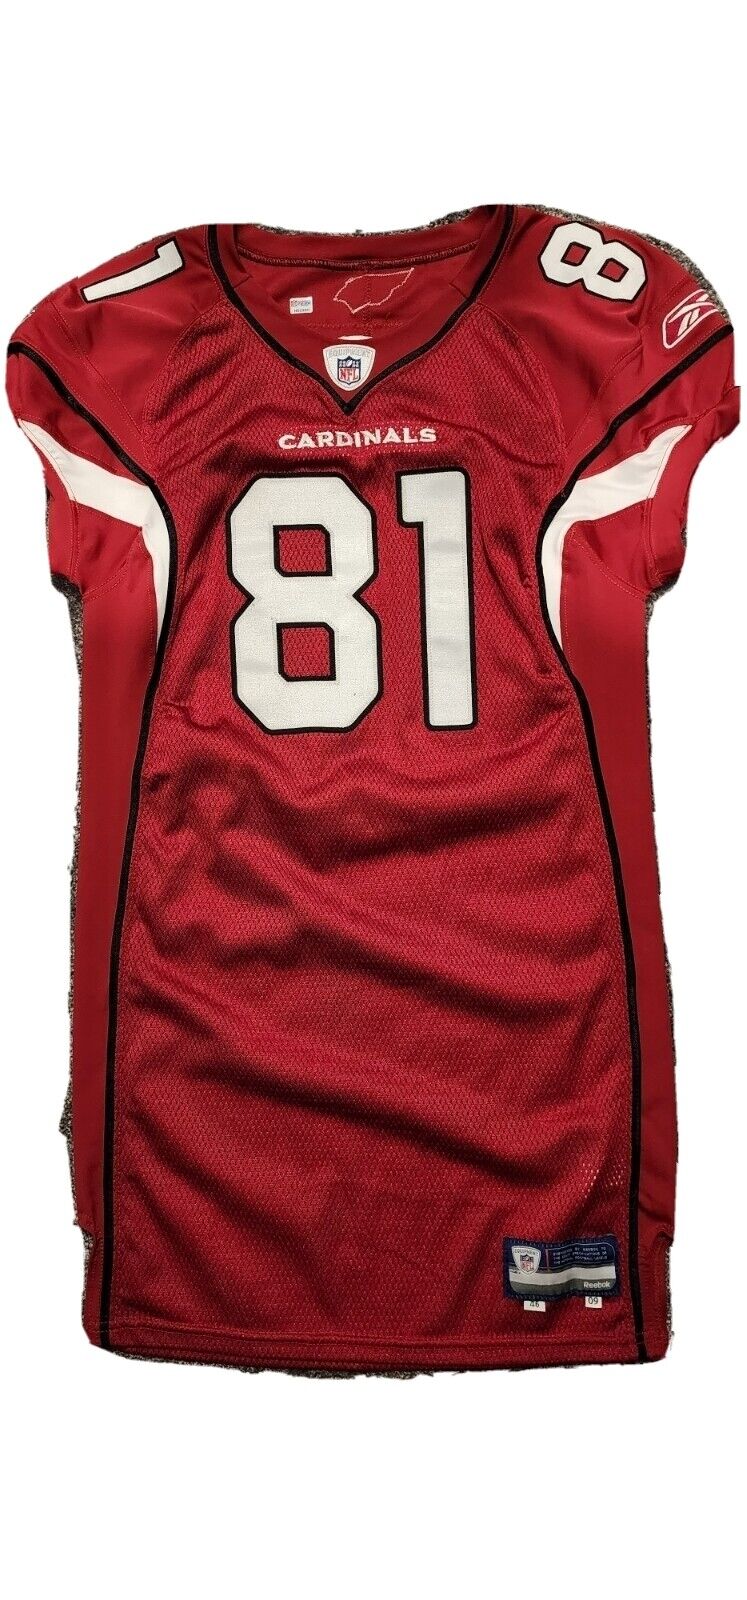 Anquan Boldin Arizona Cardinals NFL Game Used Jersey